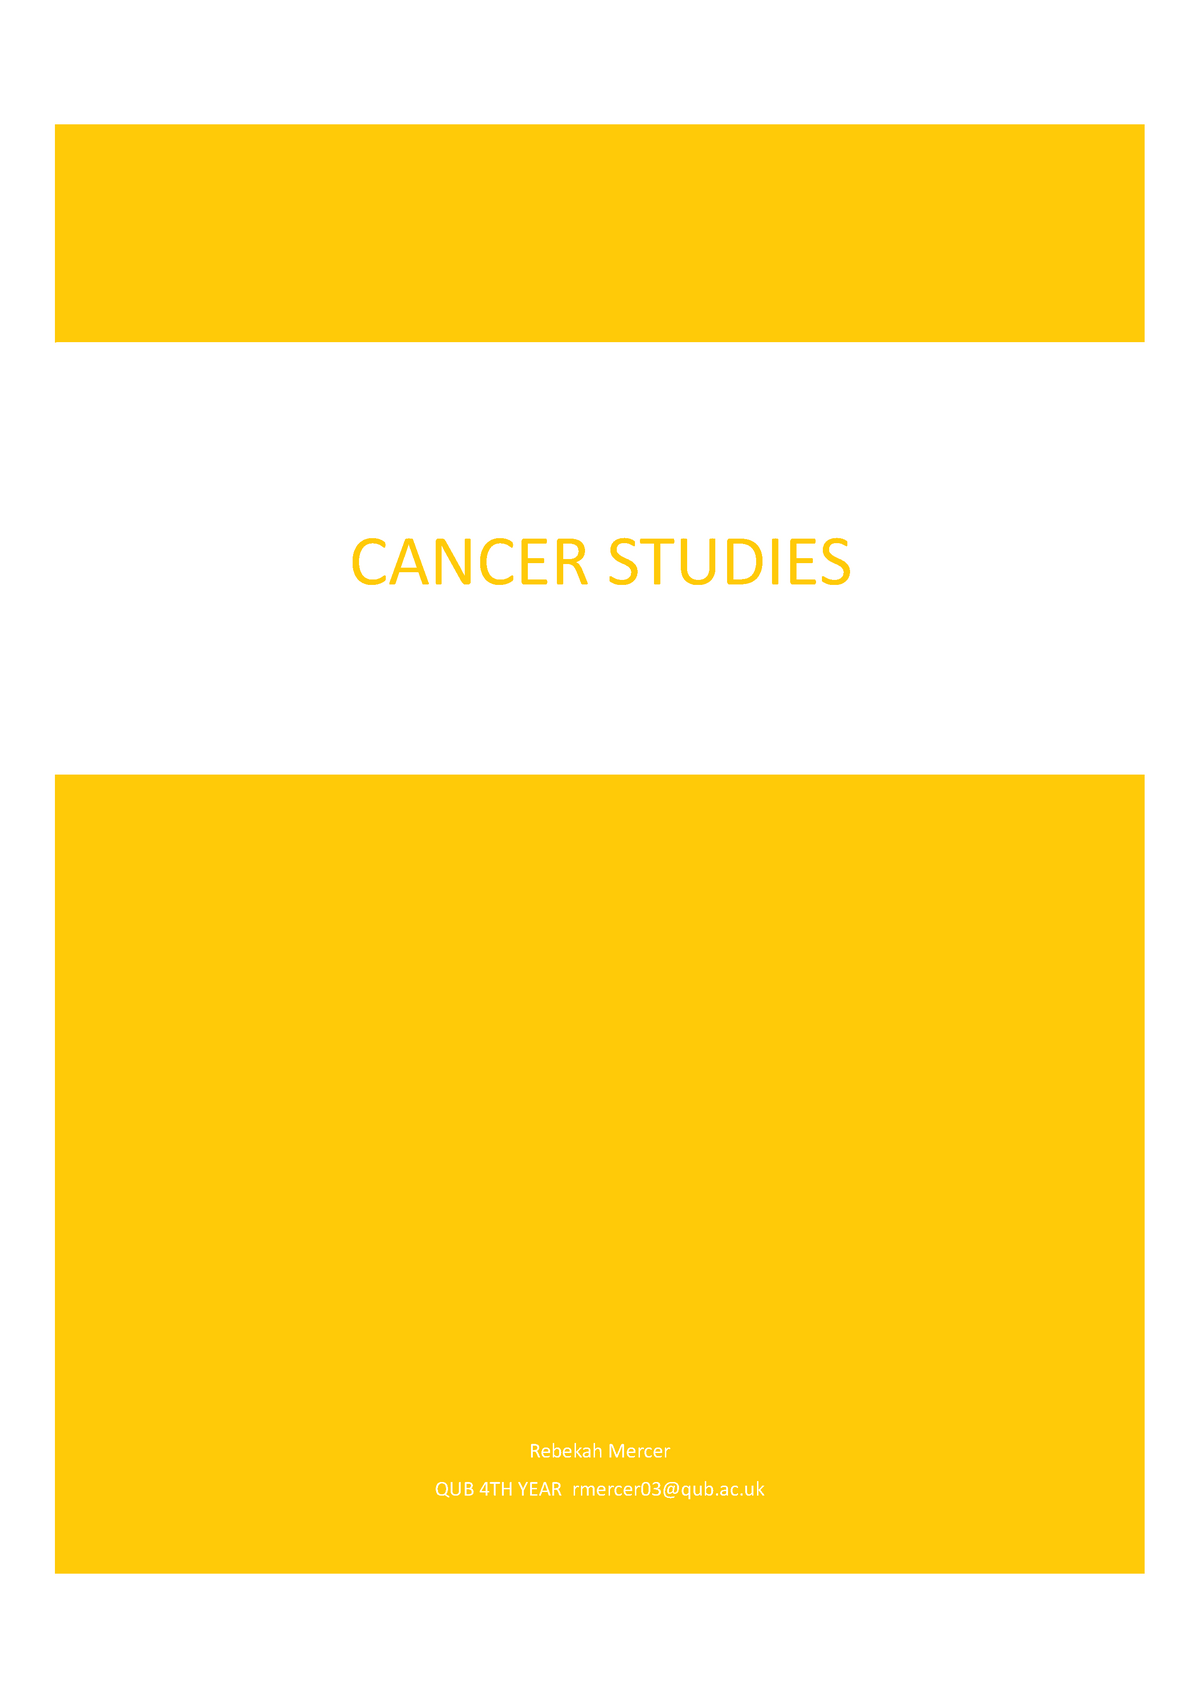 Cancer studies notes Rebekah Mercer QUB 4TH YEAR rmercer03qub.ac